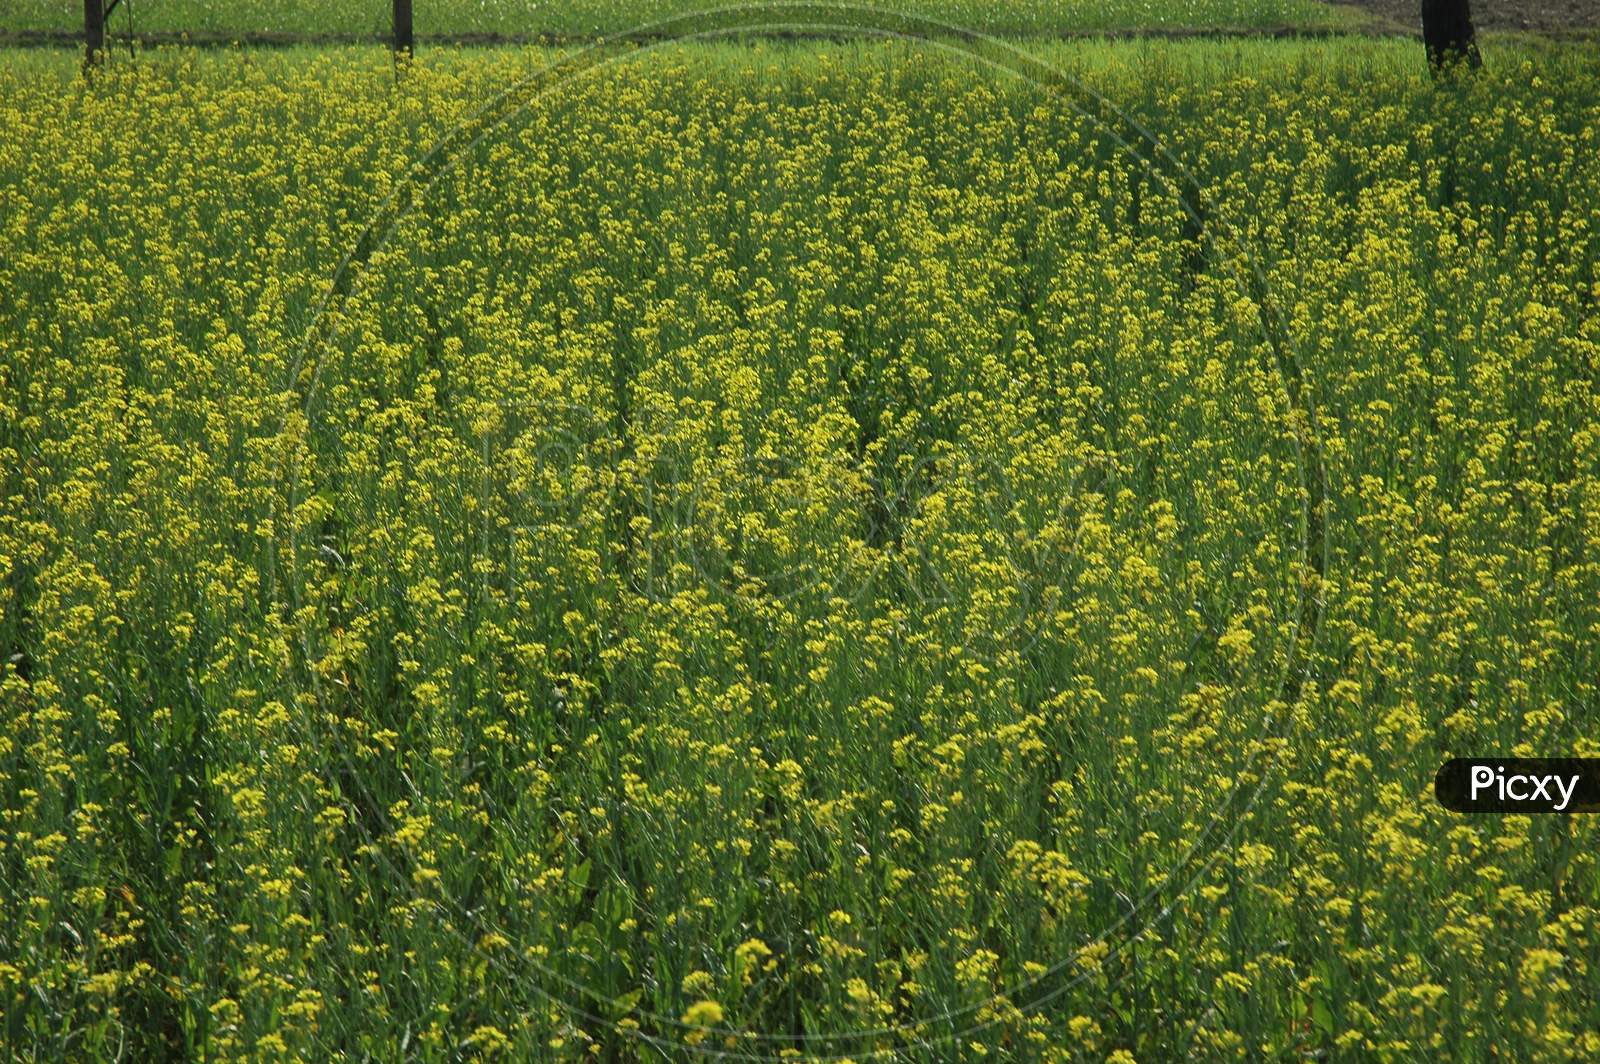 Mustard Fields With Yellow Flowers In Mushidabad